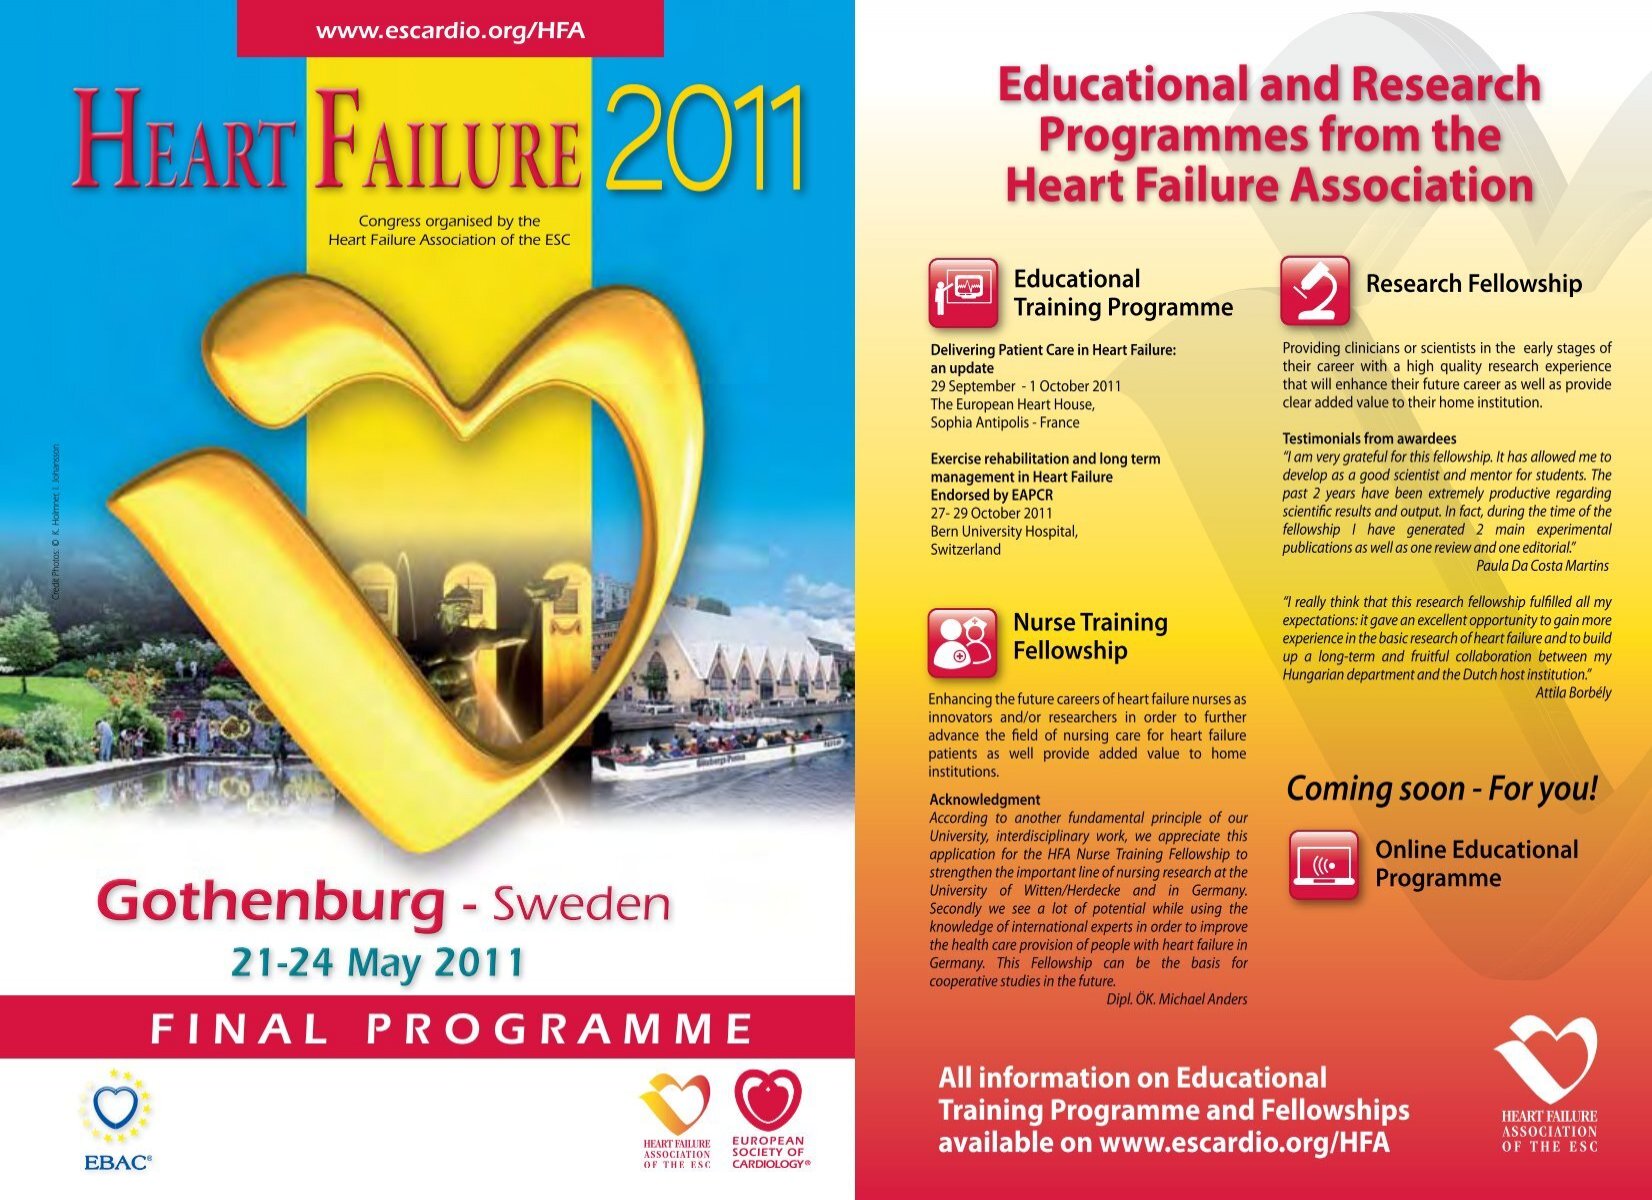 HEART FAILURE HEART FAILURE - Cardiology European of Society